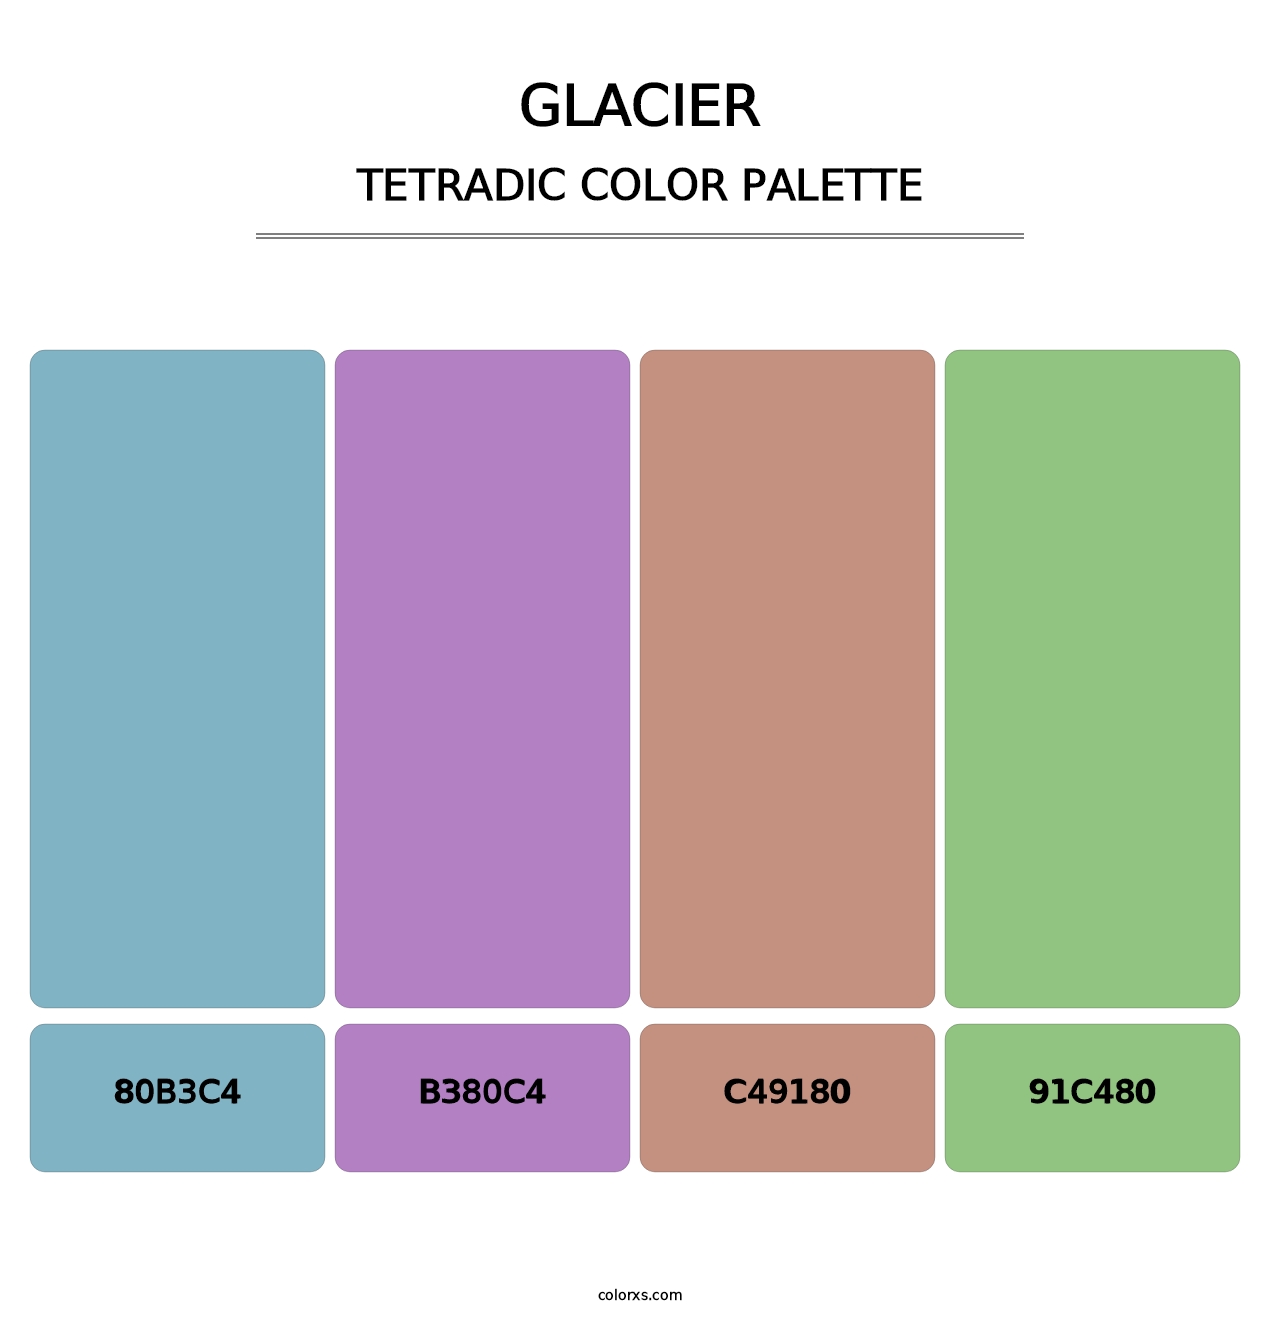 Glacier - Tetradic Color Palette